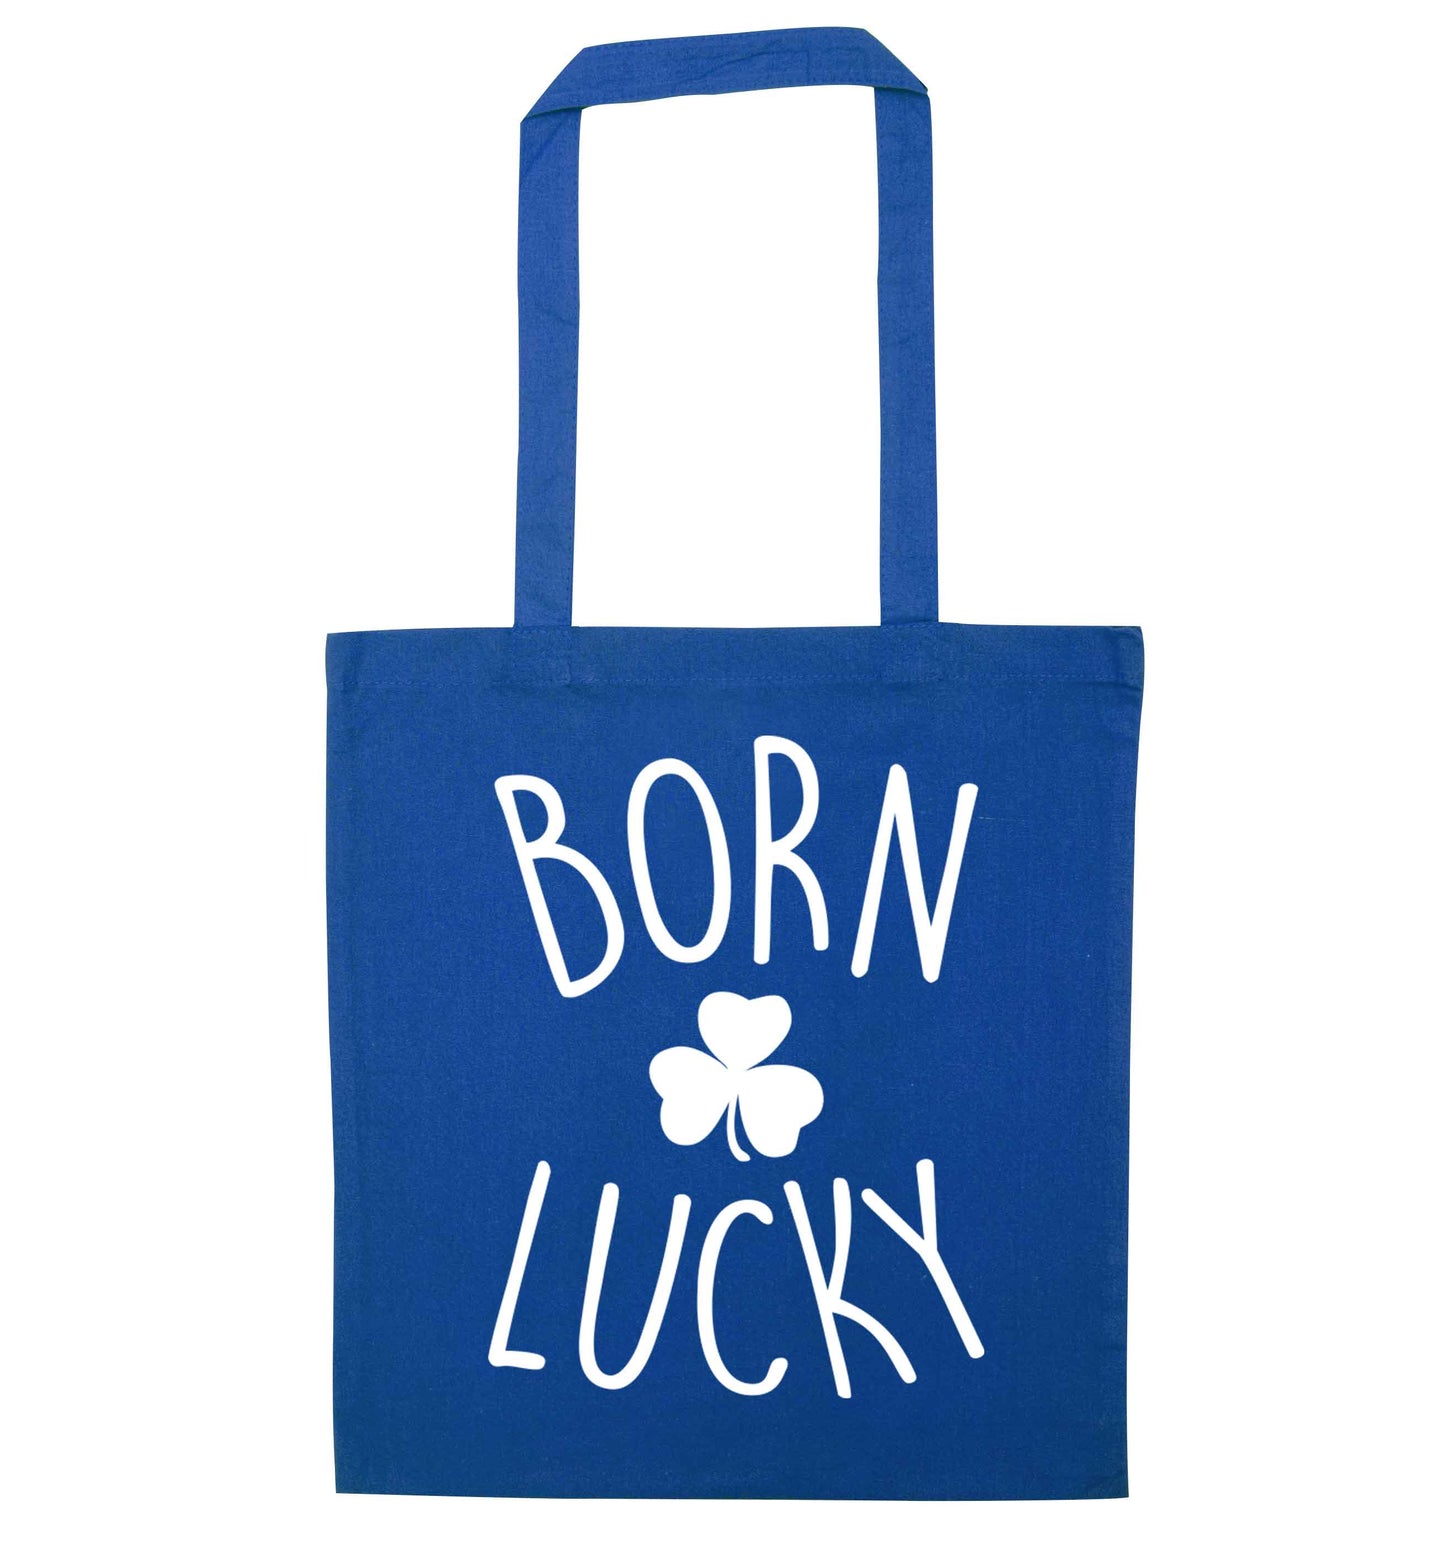  Born Lucky blue tote bag